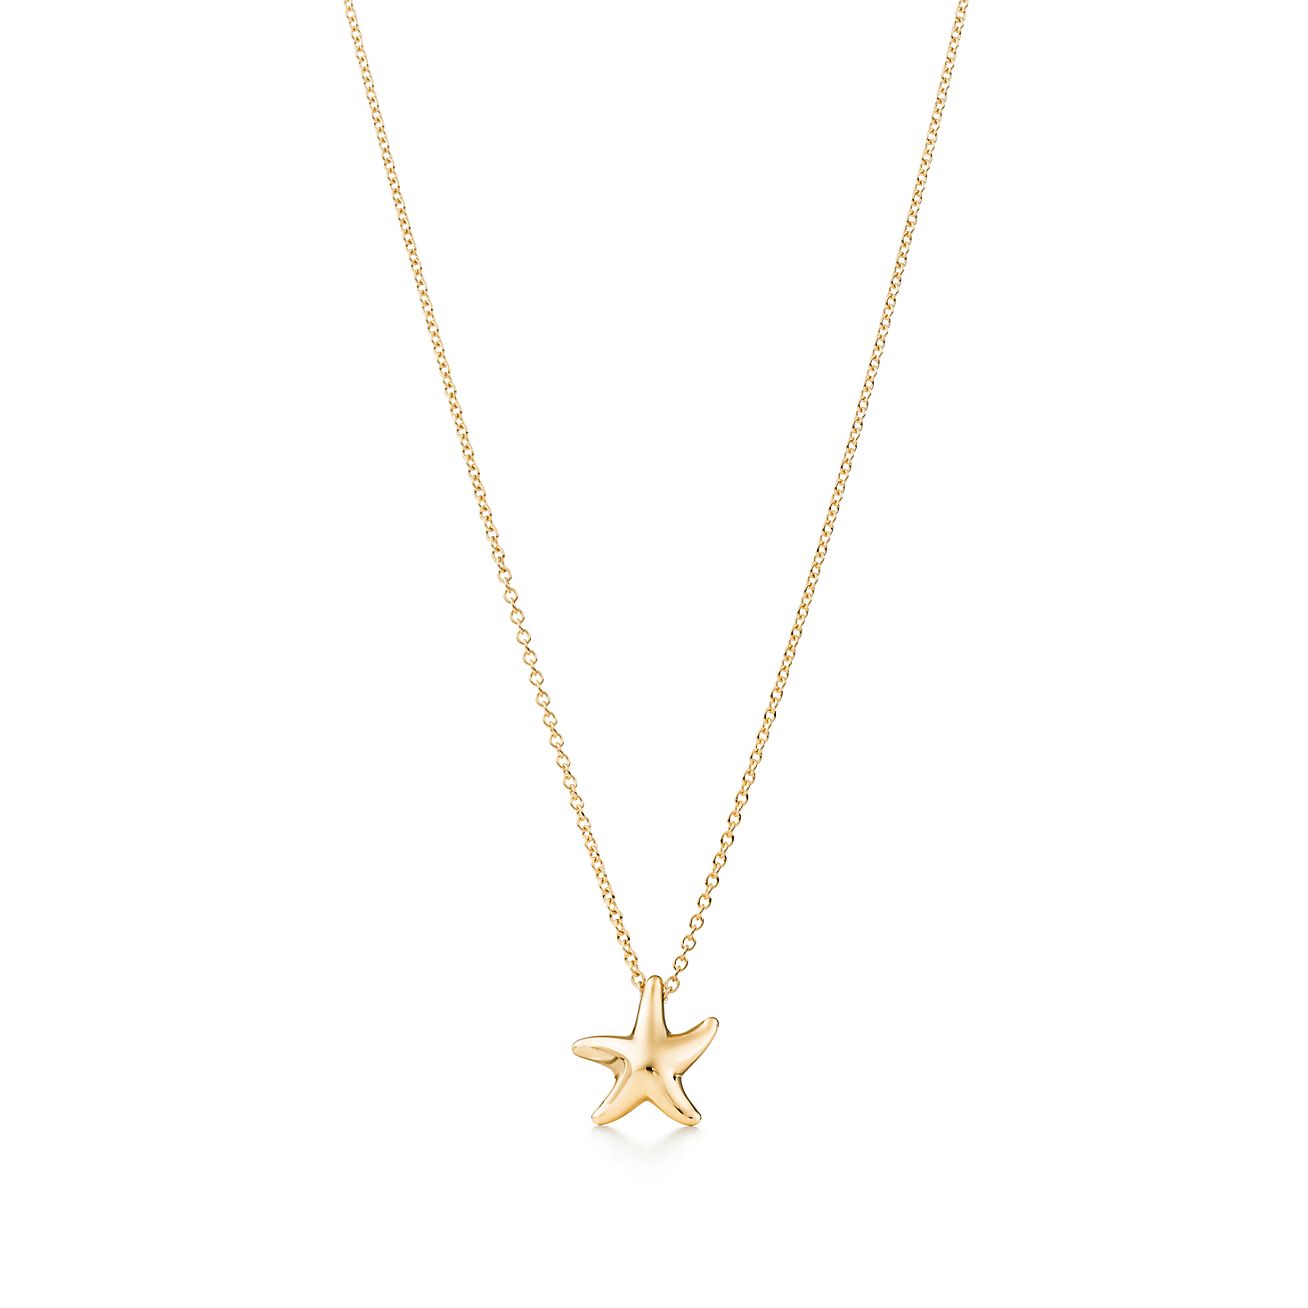 Elsa Peretti® Starfish pendant in 18k gold, 12mm. | Tiffany & Co.